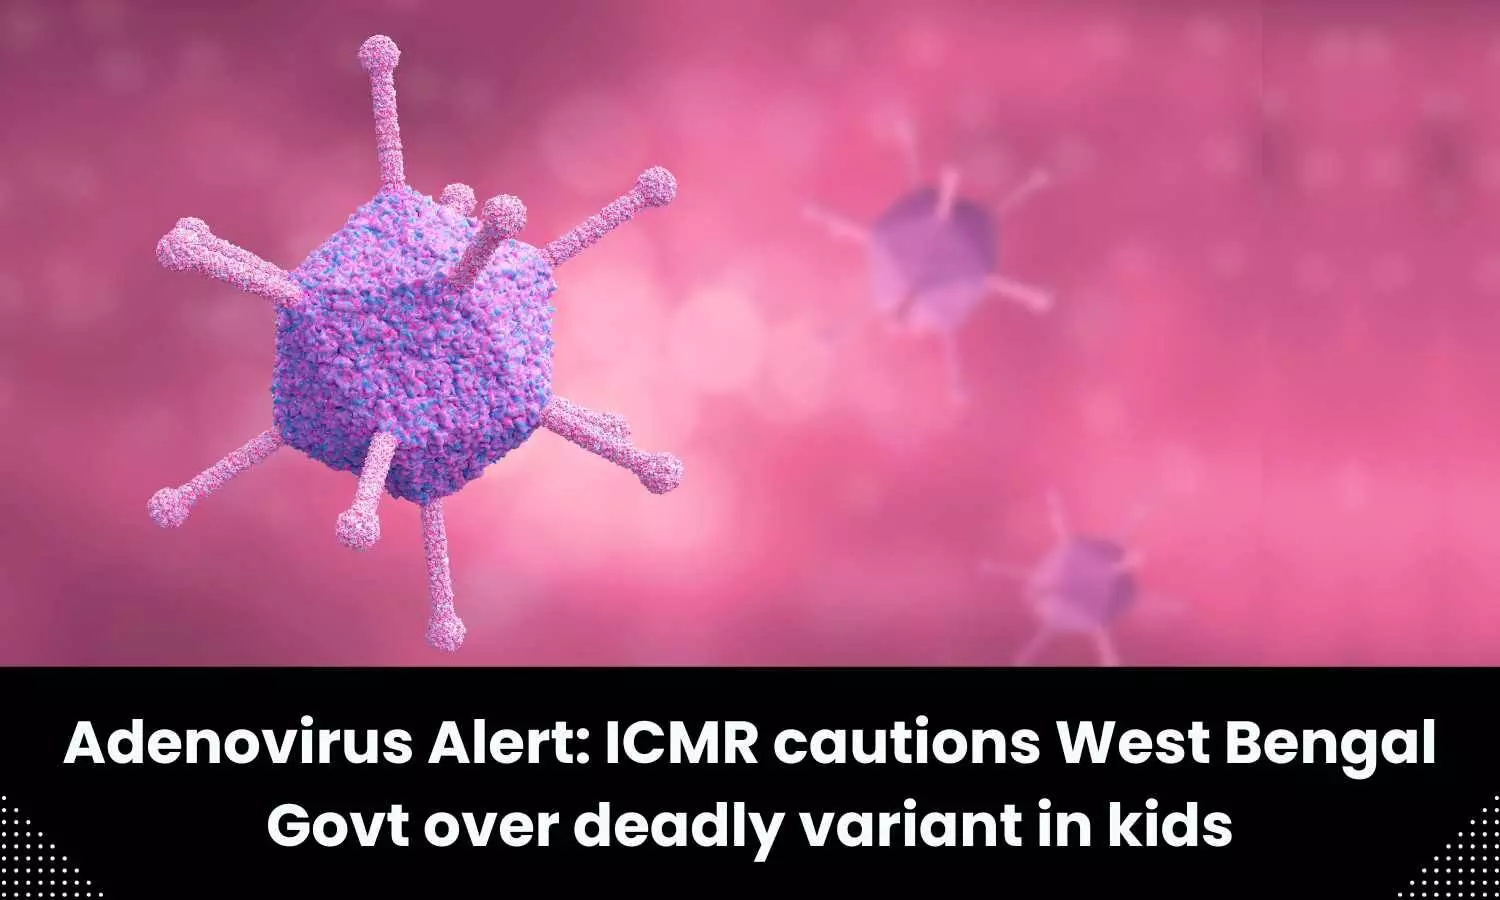 ICMR cautions West Bengal govt over deadly variant of adenovirus in children